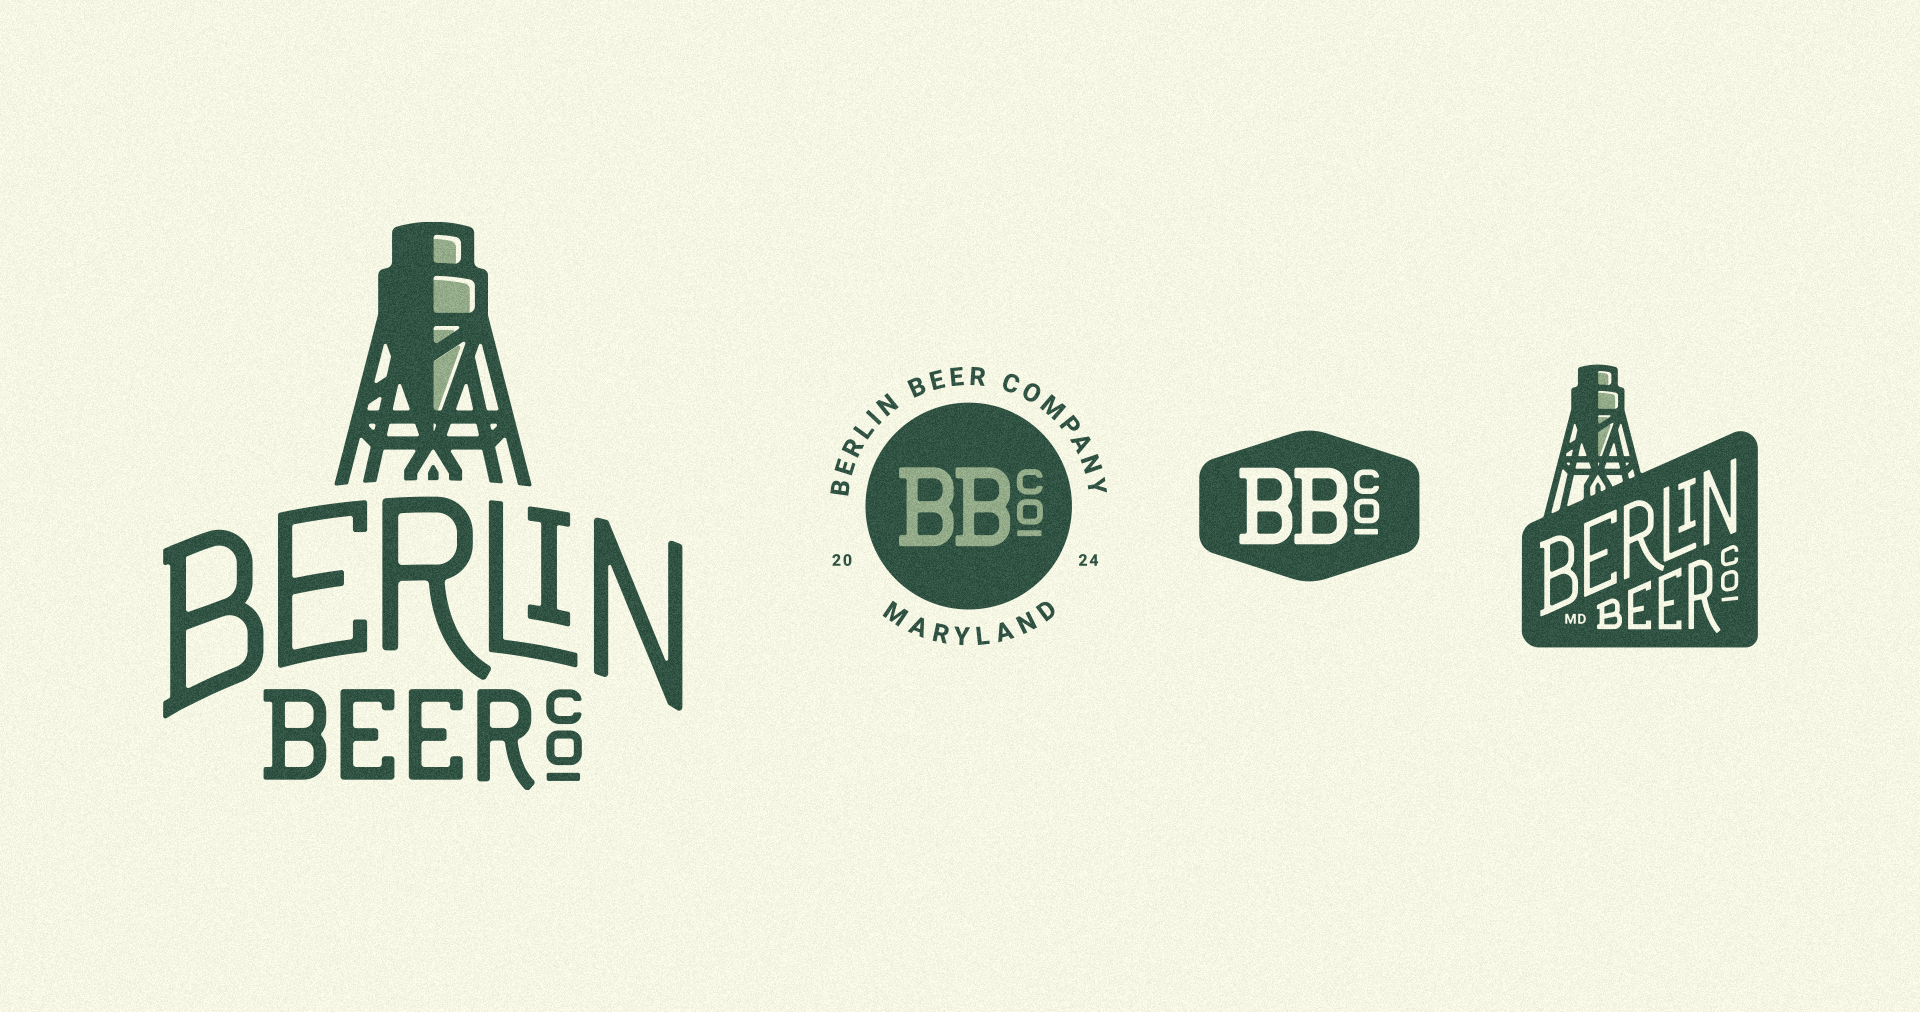 Berlin Beer Company logo mockups and badges